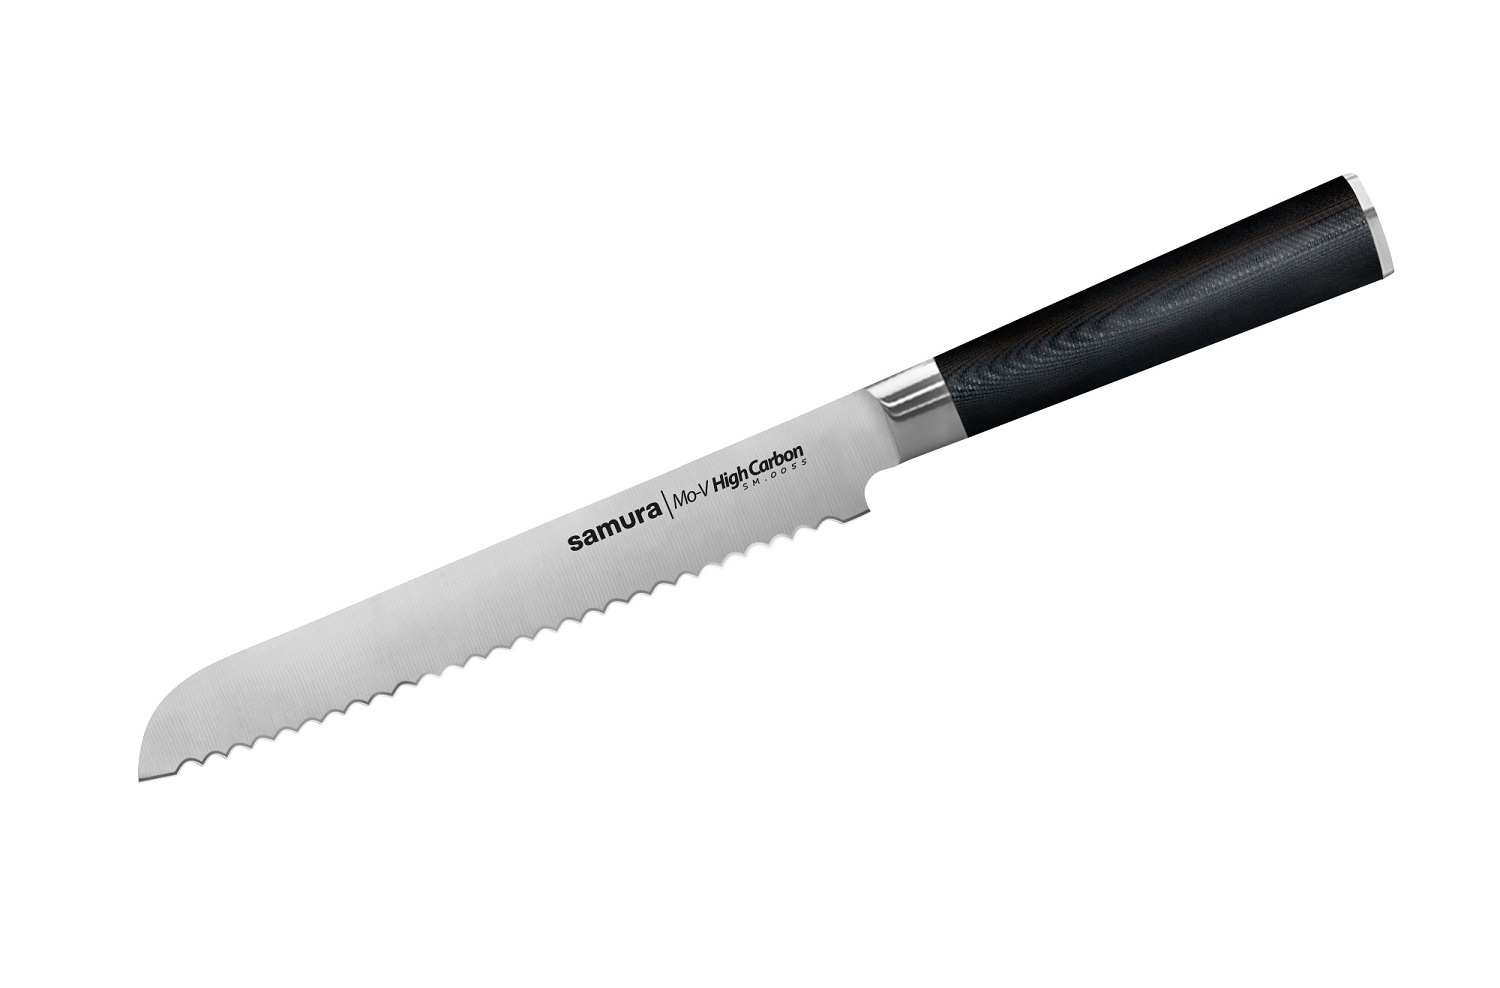 Нож Samura для хлеба Mo-V, 23 см, G-10 нож для овощей mo v 9 см sm 0010 k samura